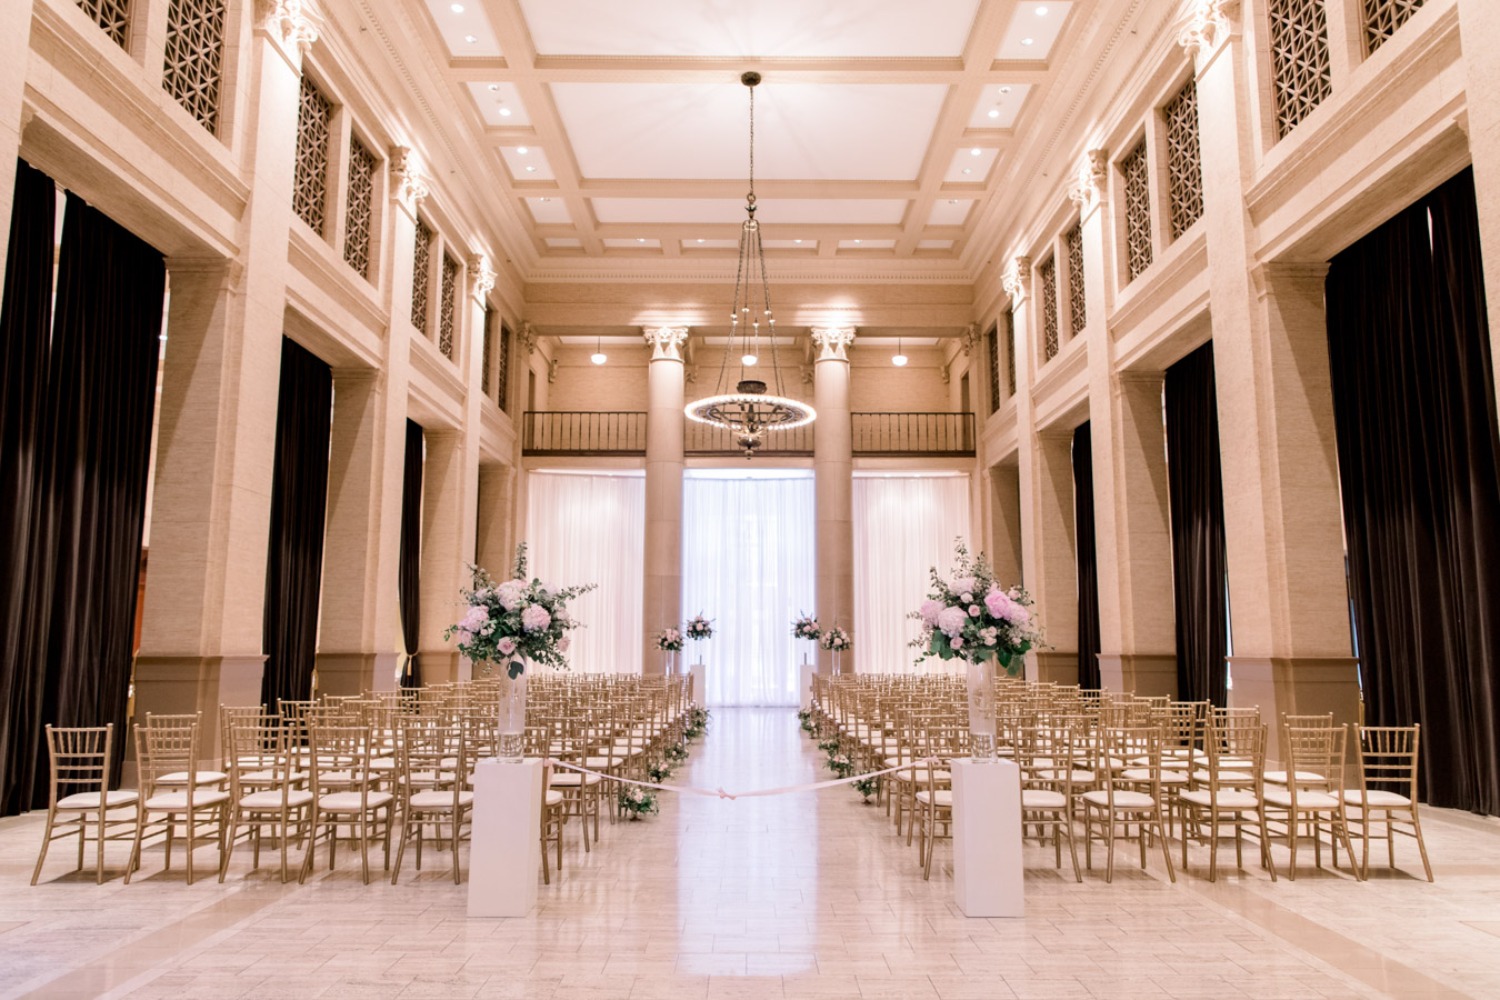 Elegant indoor ceremony